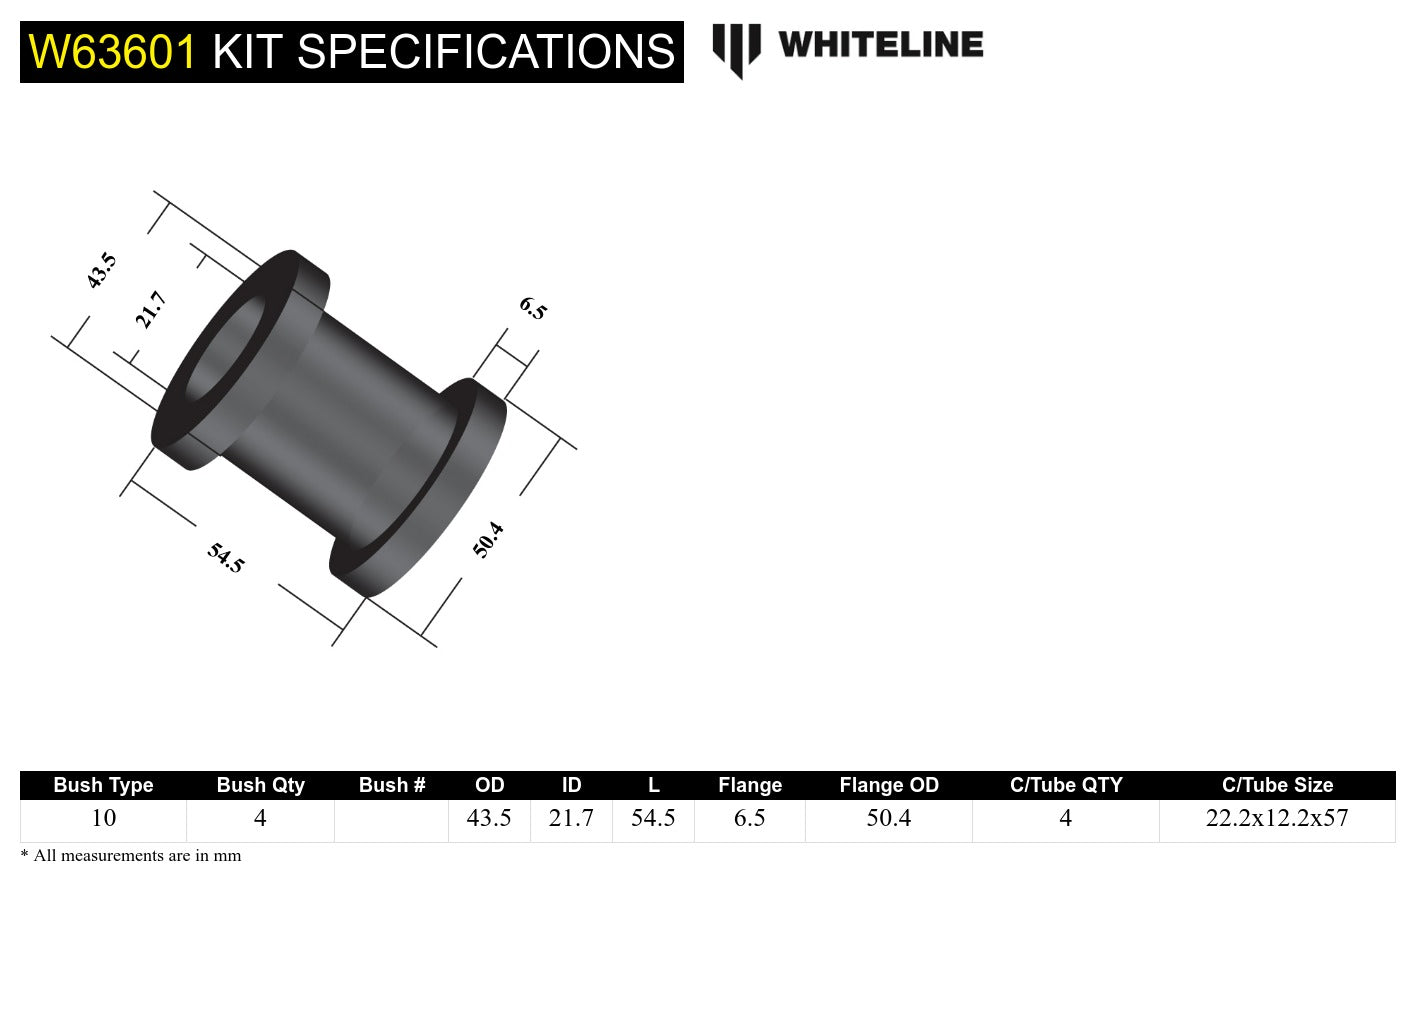 Rear Control Arm Lower Front - Bushing Kit to Suit Mazda CX-5 KE, KF and Mazda6 GJ,GL (W63601)